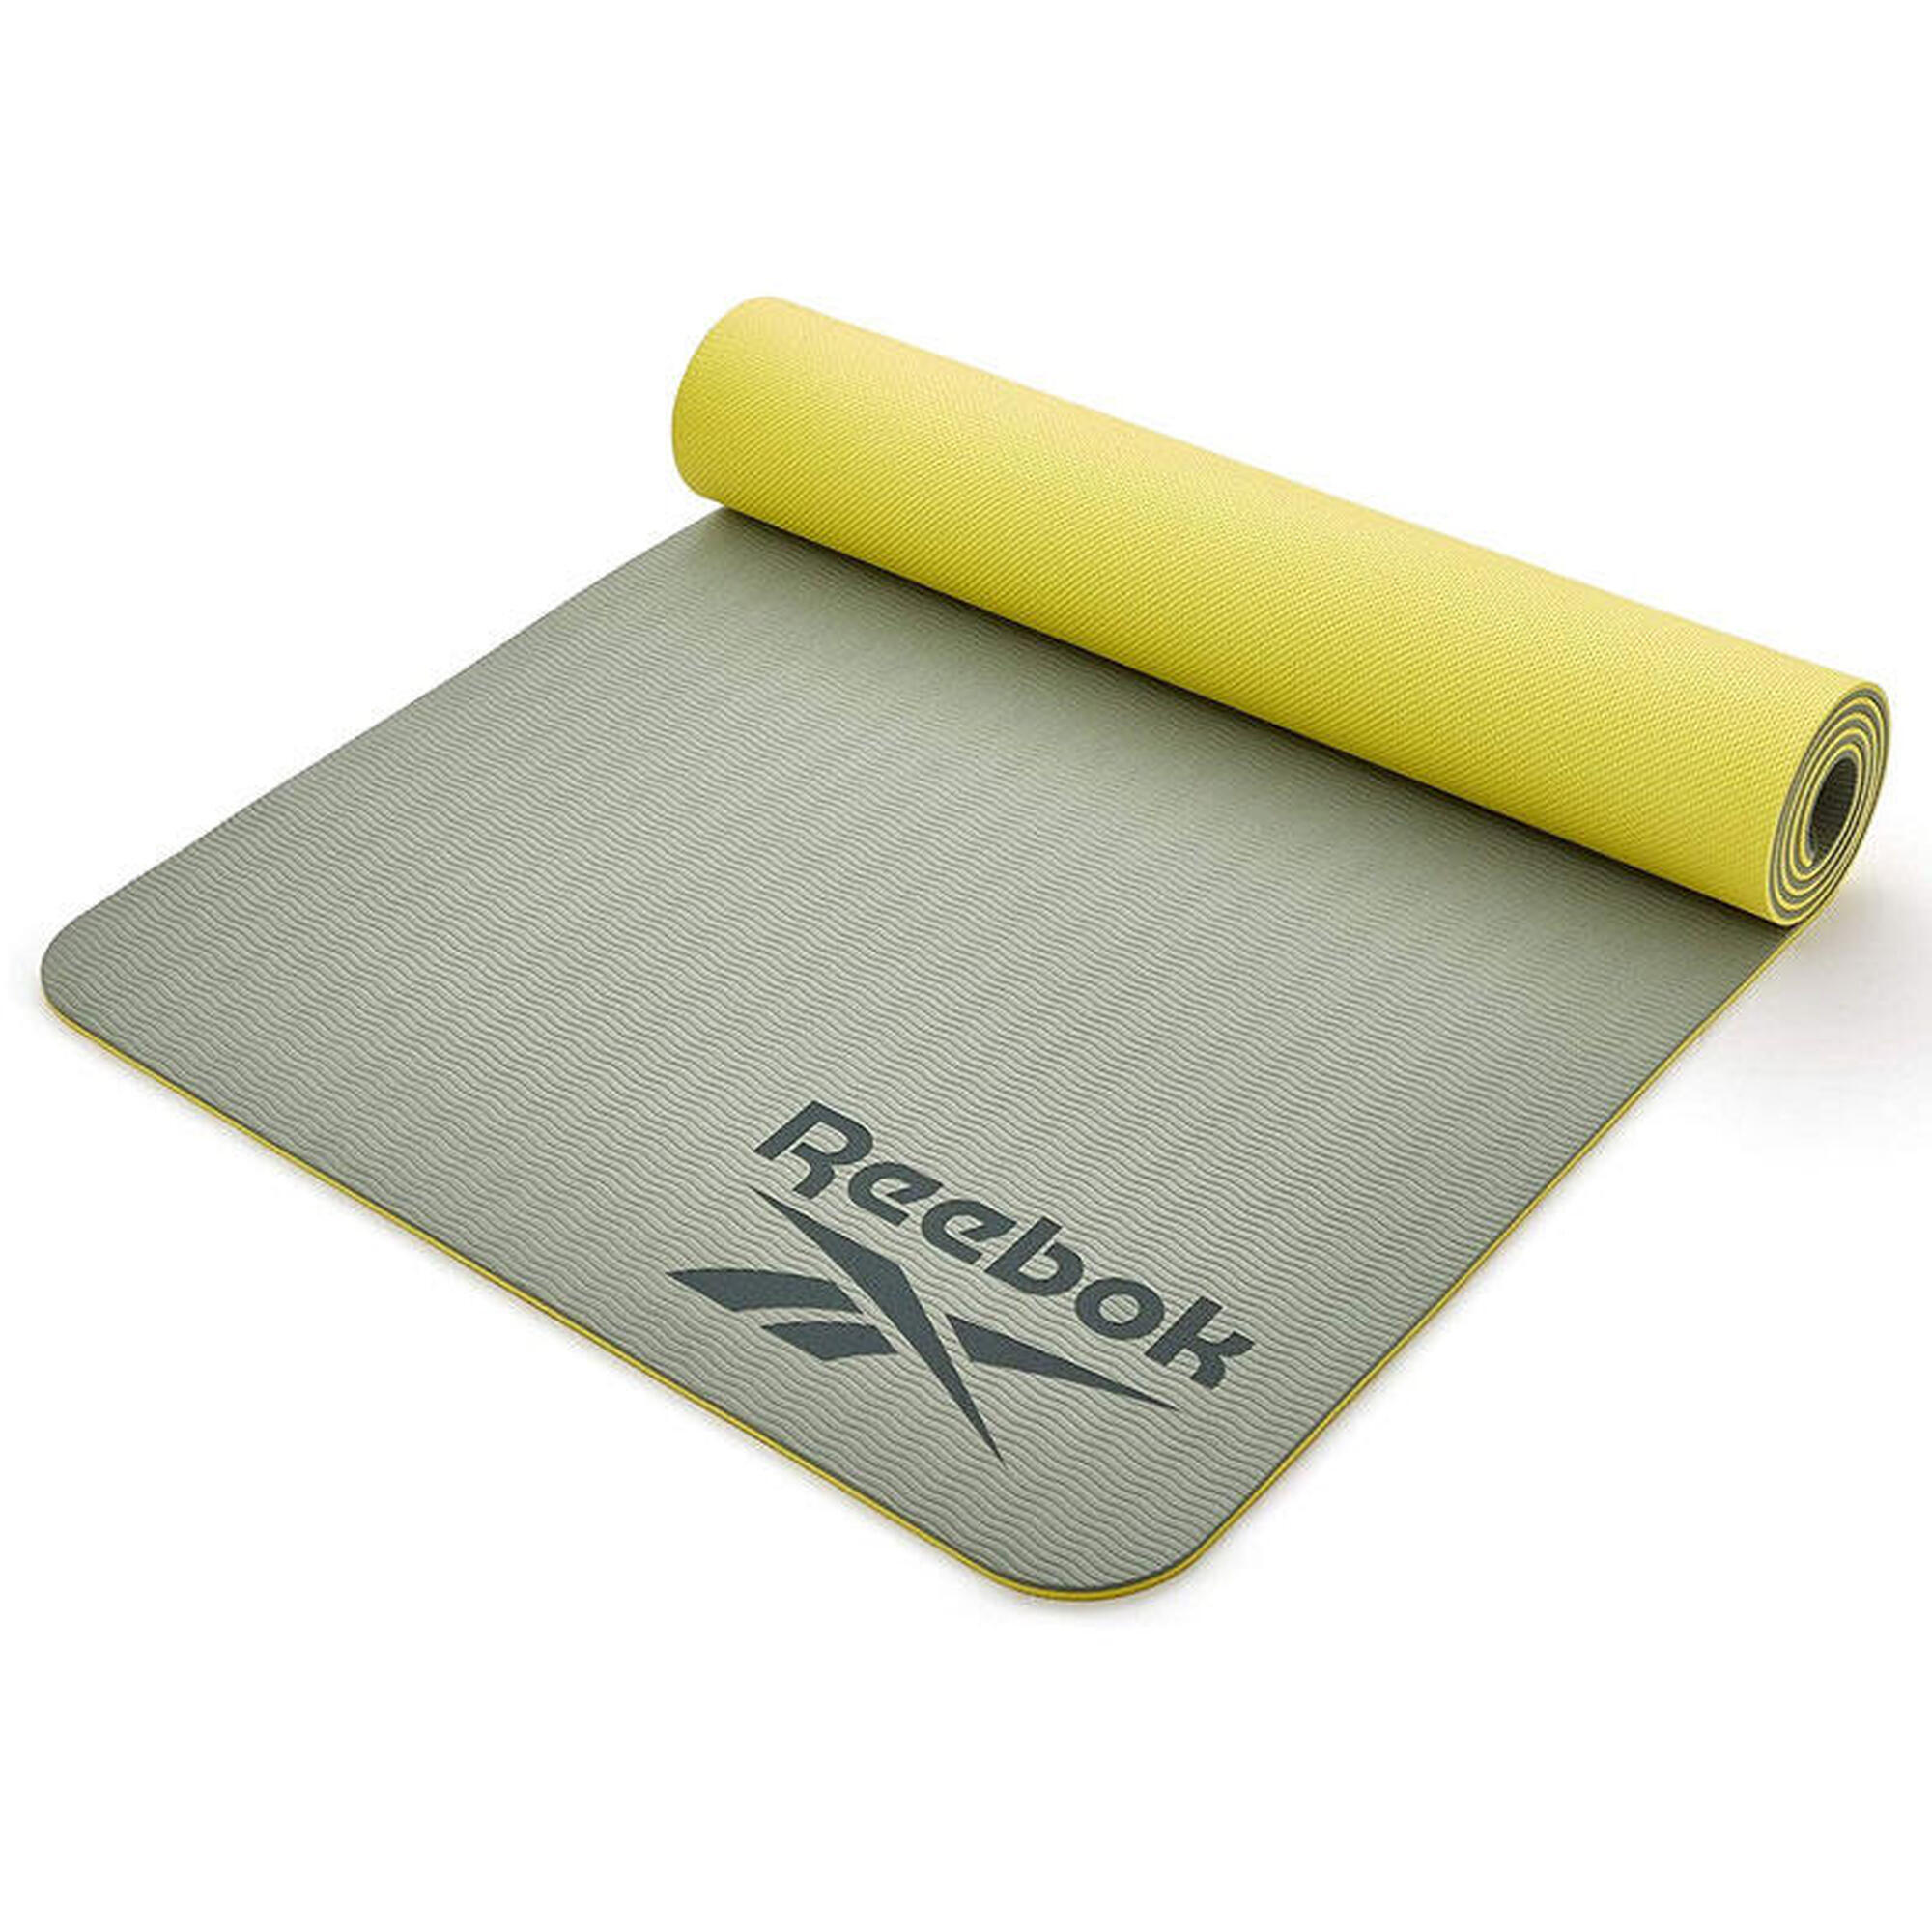 Tappetino Yoga bifacciale Reebok - 6 mm - Verde